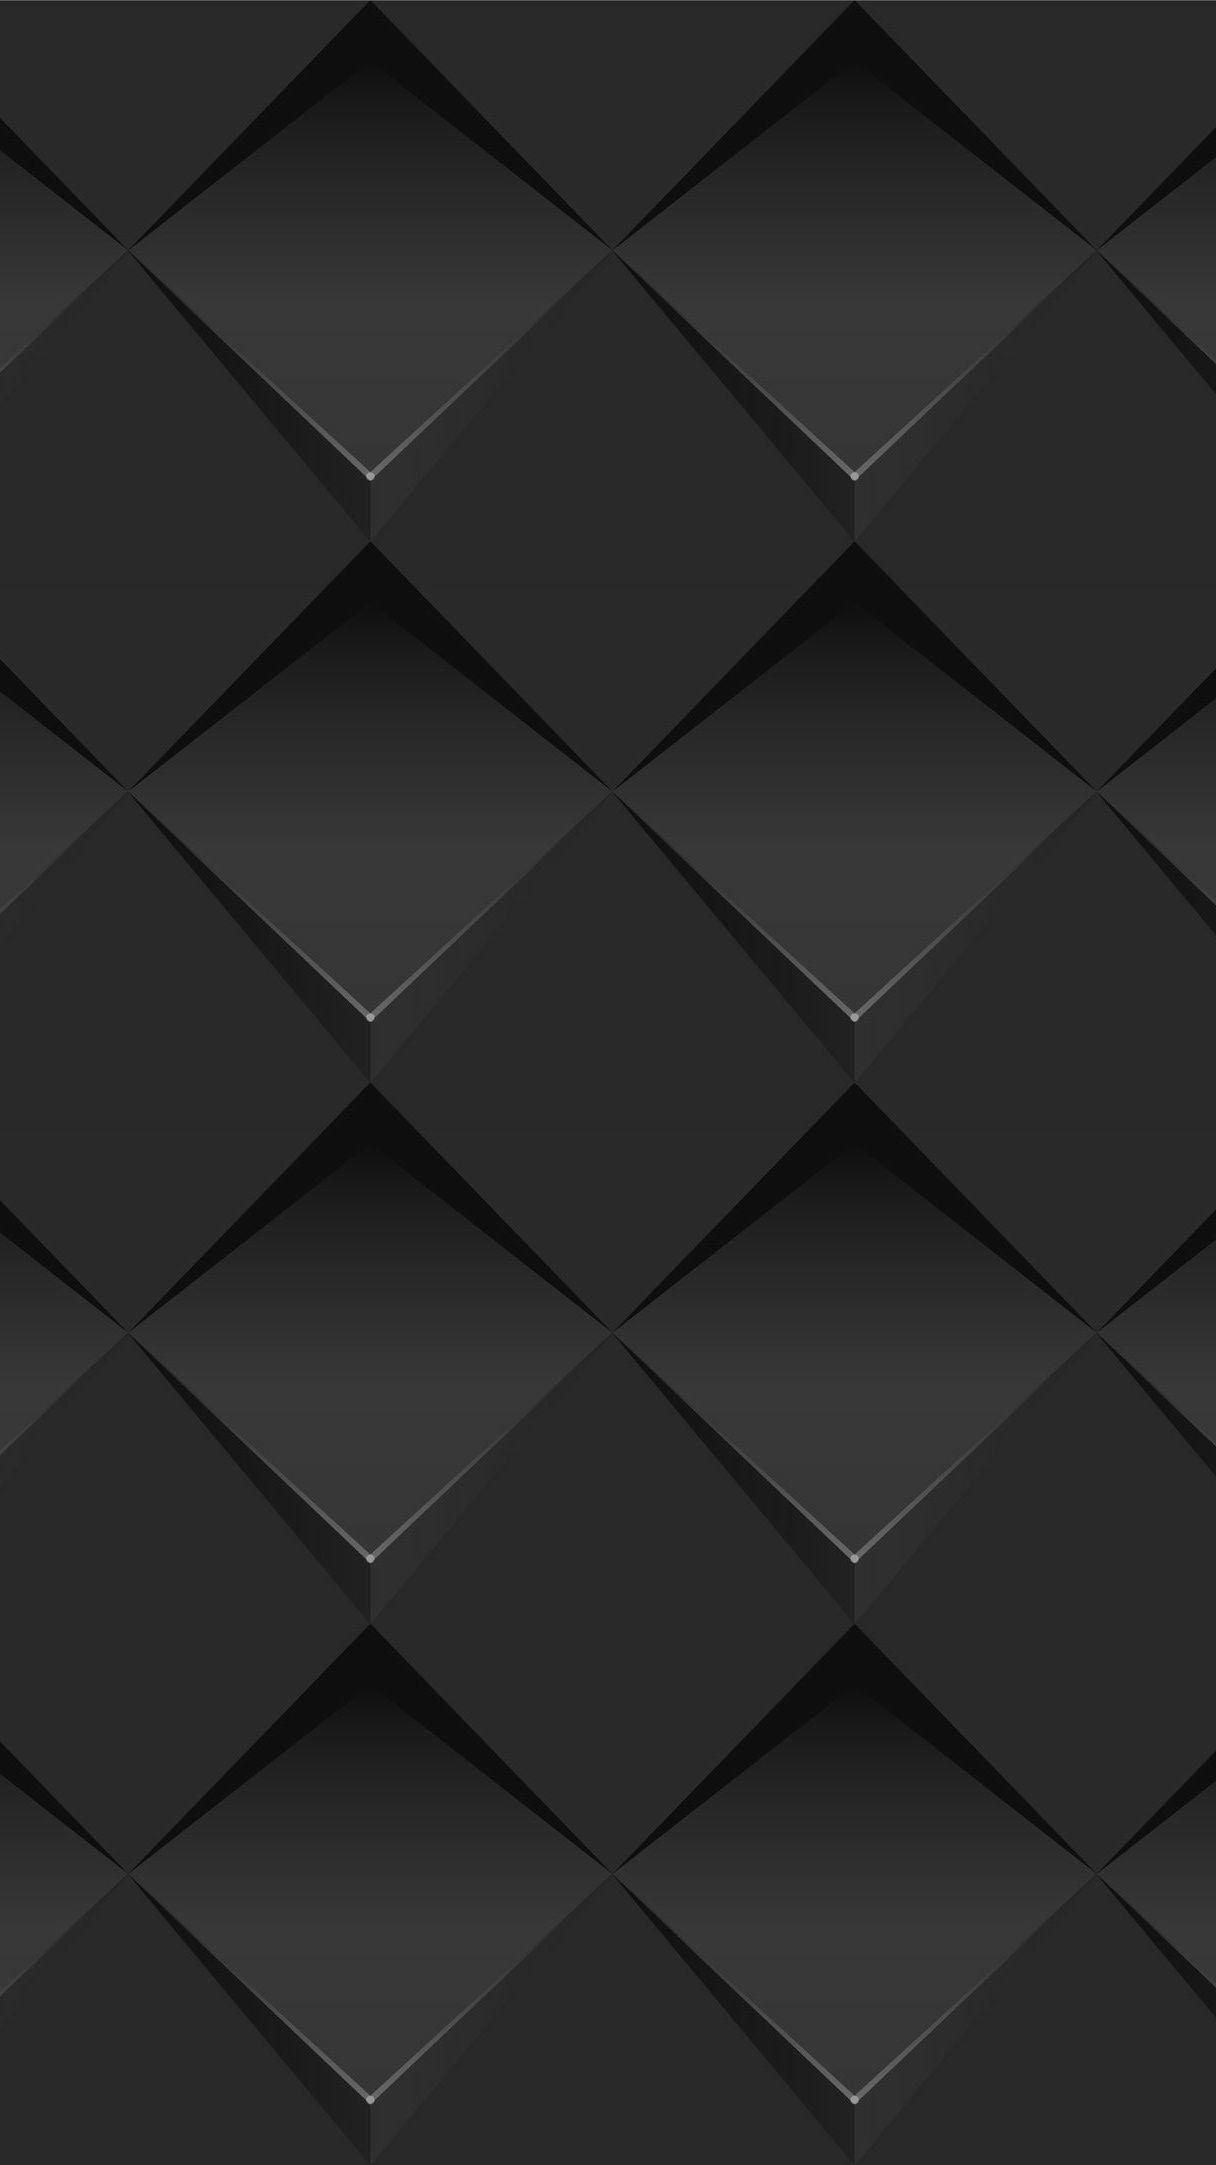 Black Geometric Wallpapers - Top Free Black Geometric Backgrounds ...